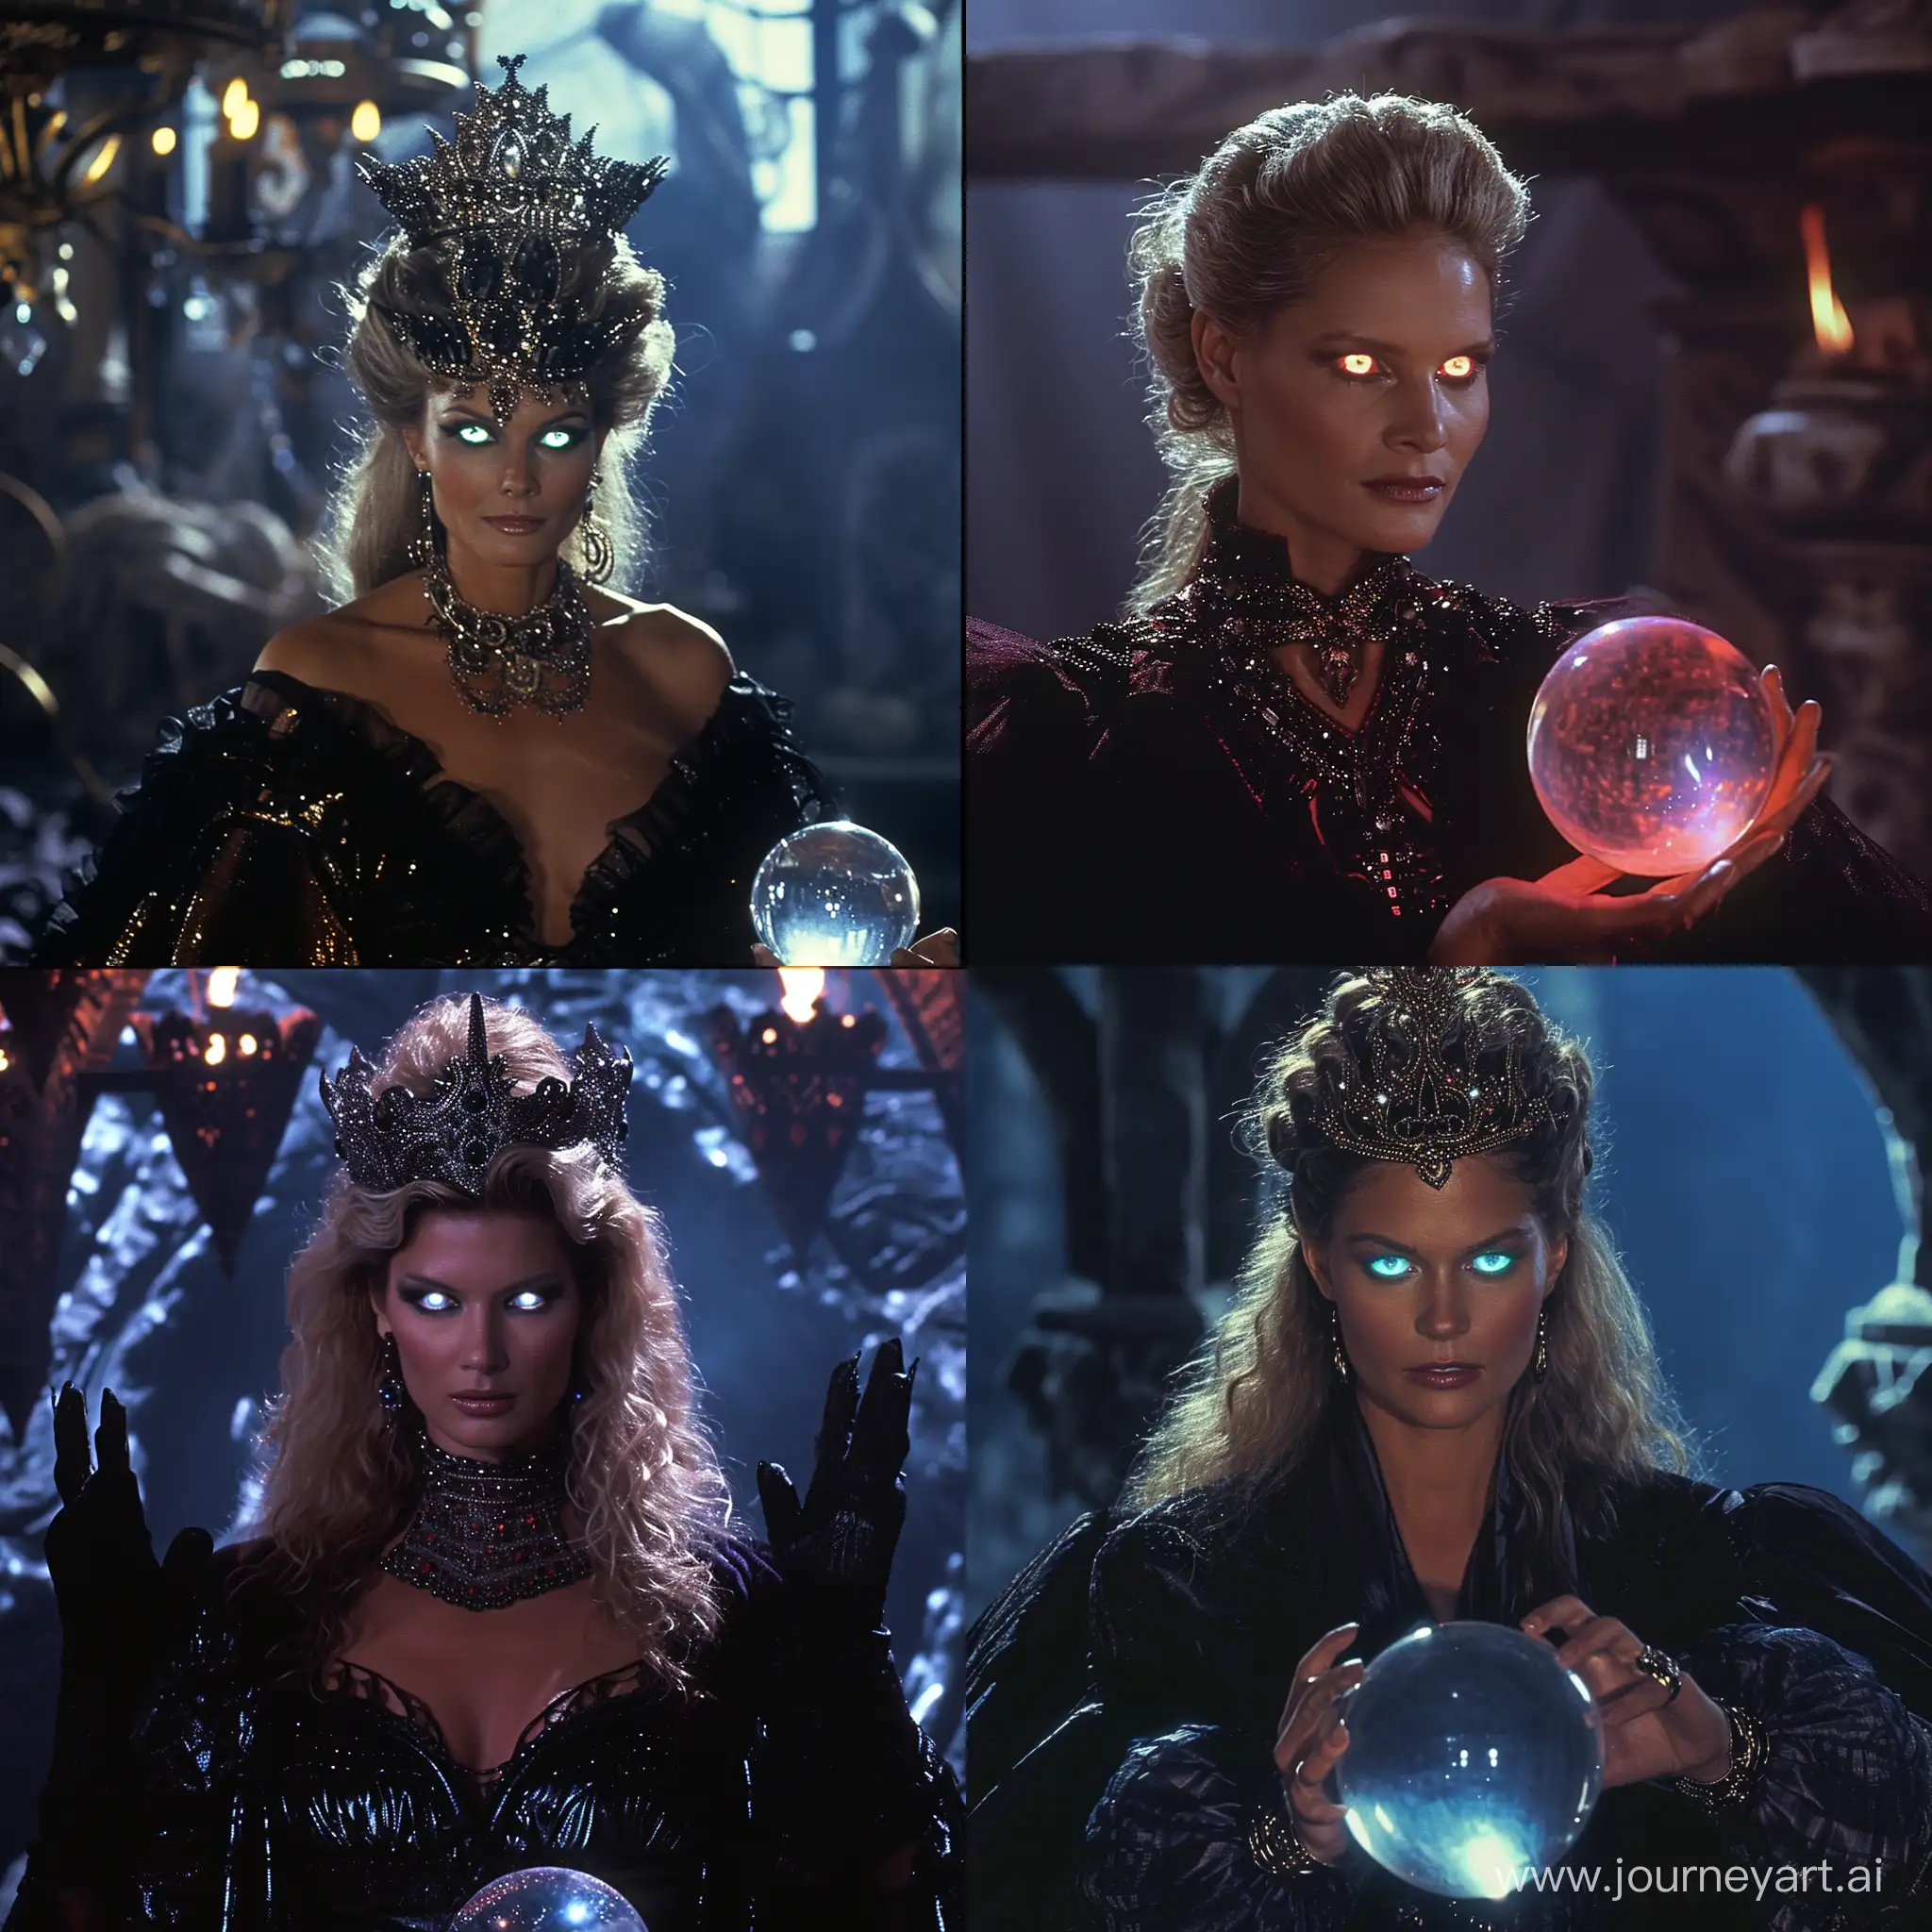 Heidi Klum in an 80s fantasy movie, dark queen, glowing eyes, crystal ball.